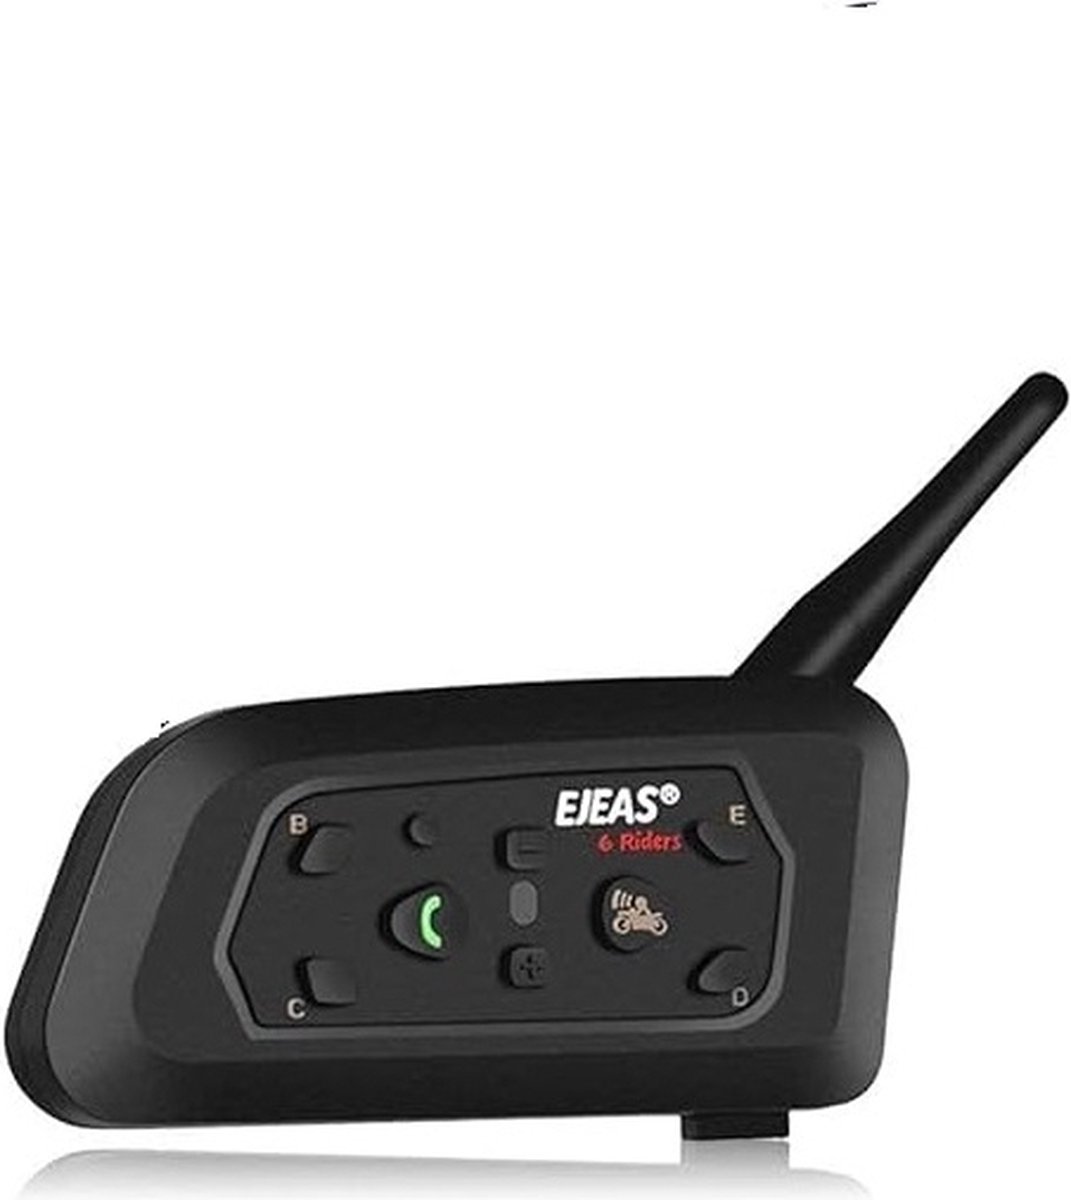 EJEAS Motorhelm Headset - Motoraccessoire - V6 PRO - Motor - Bluetooth Motorfiets - Intercom - Helm Headset - 6 Rijders Communicator - Waterdicht